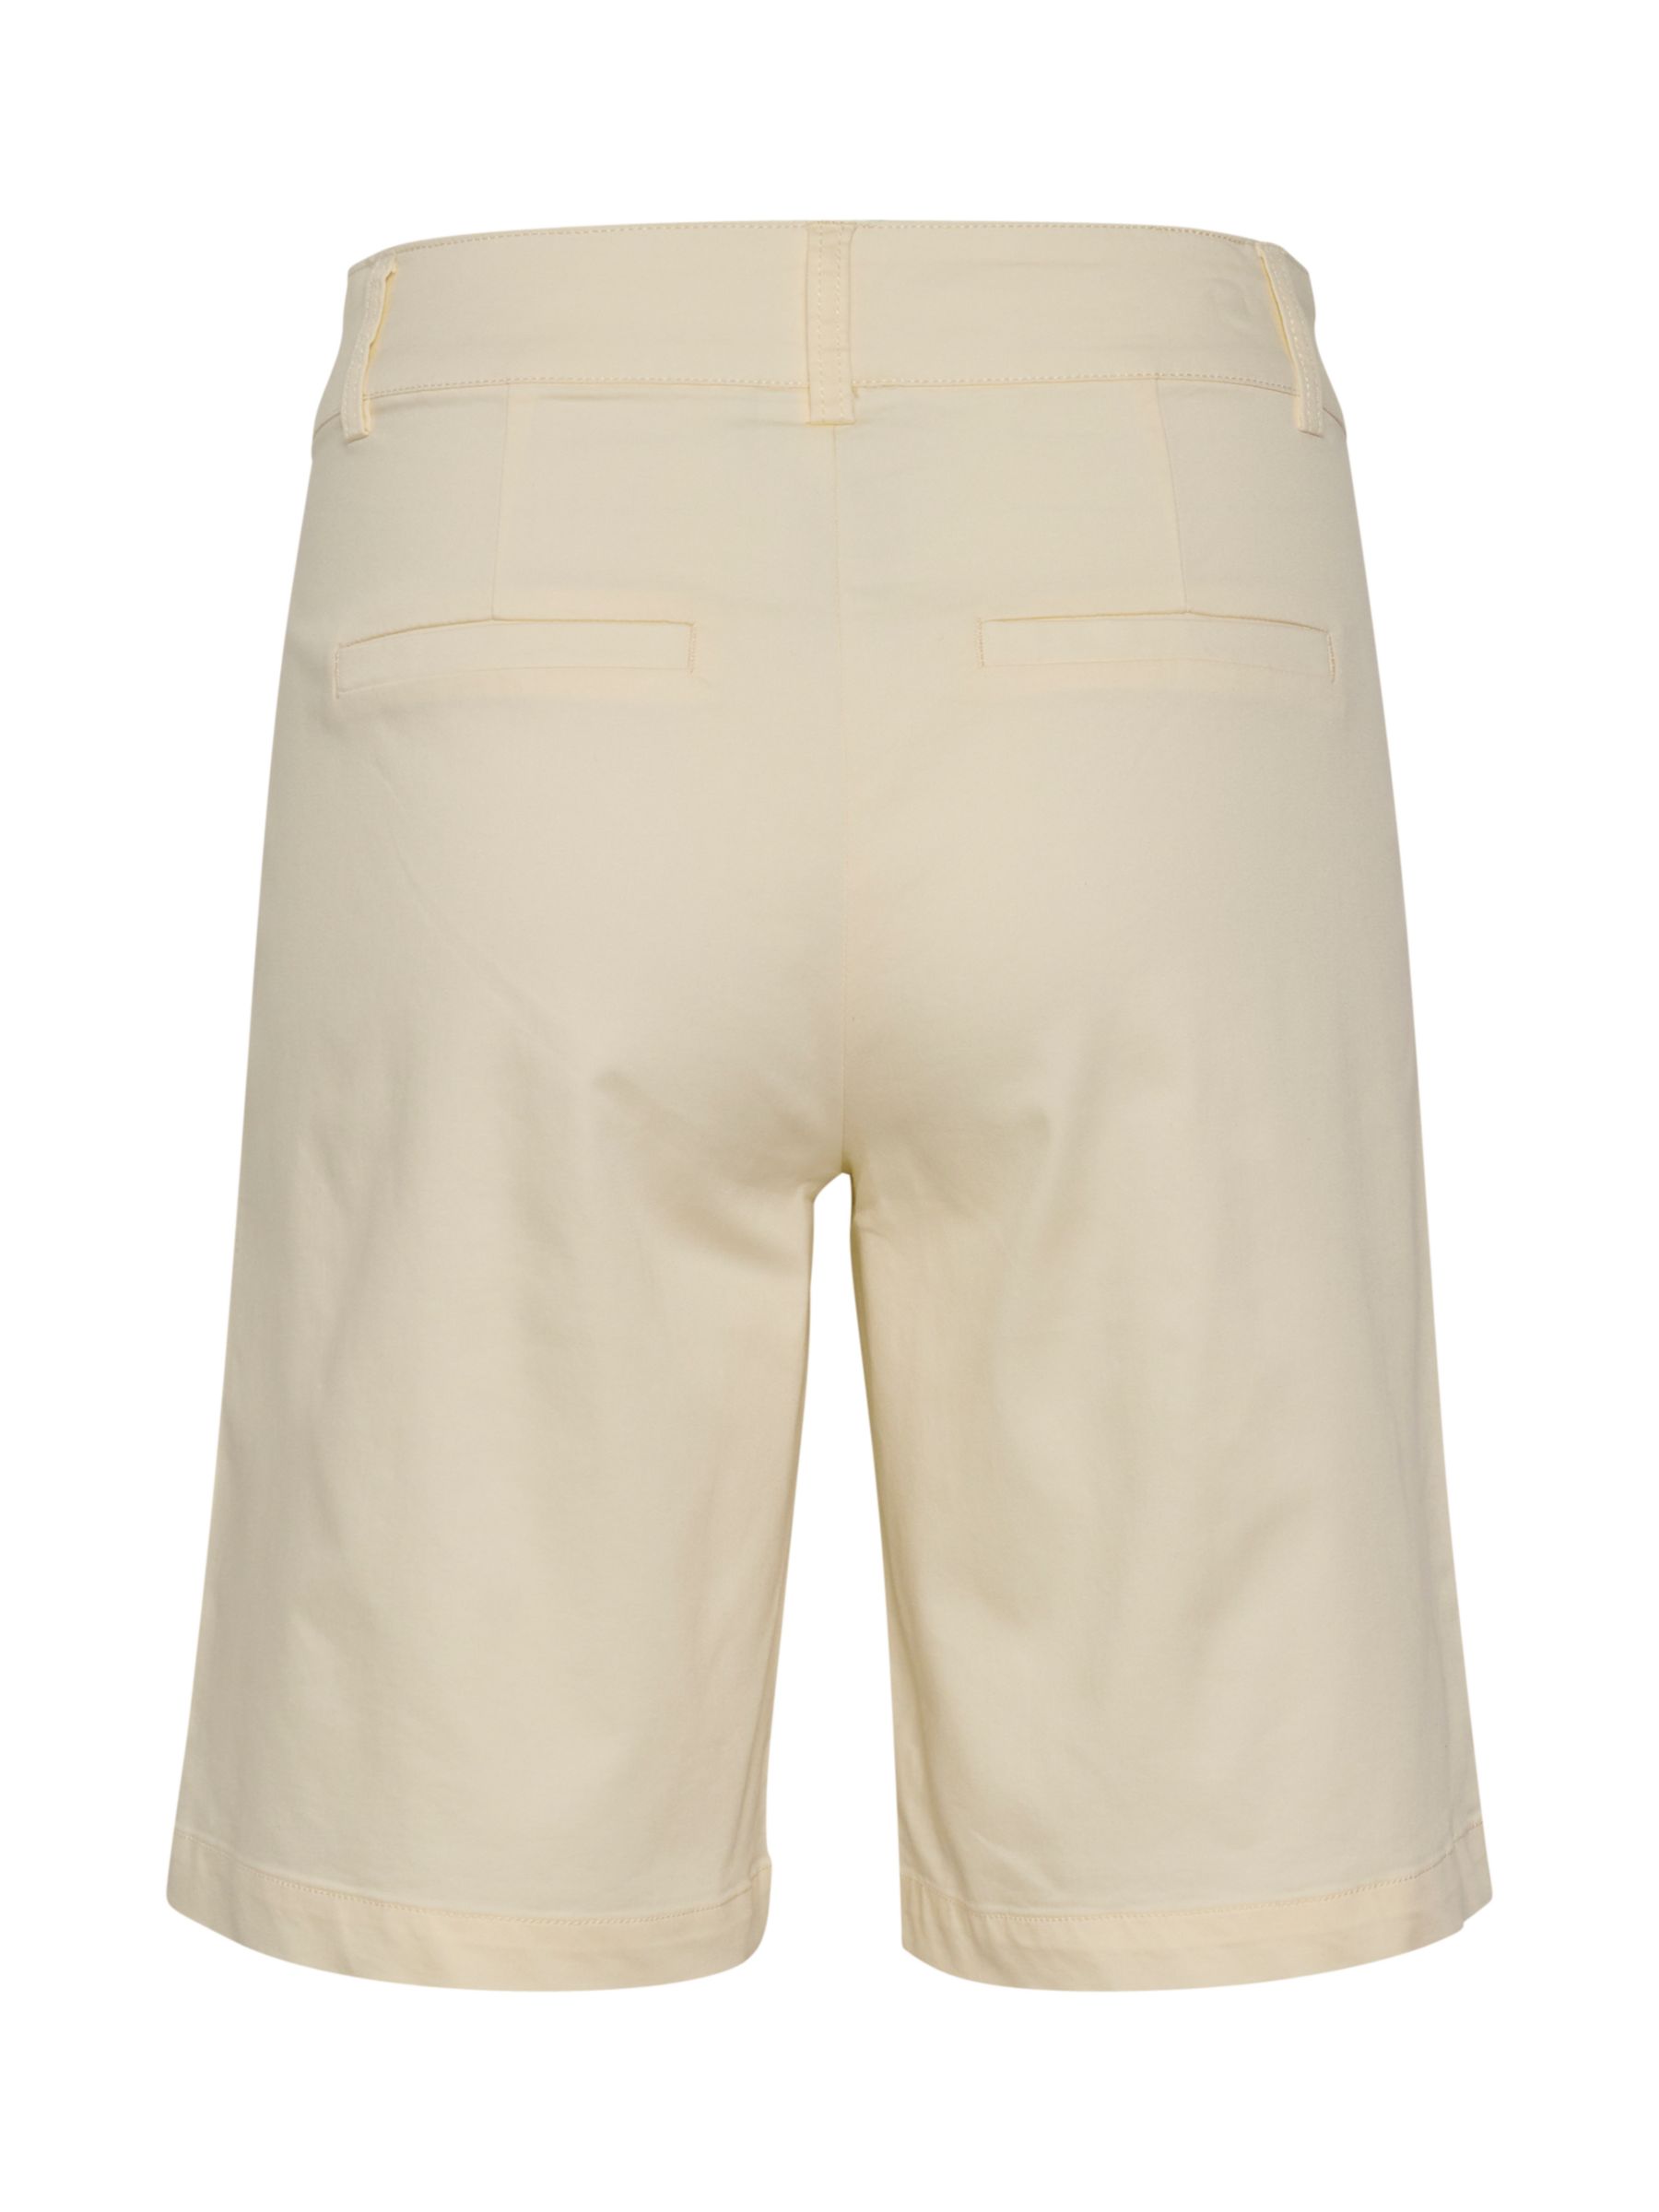 KAFFE Lea High Waist City Shorts, Antique White at John Lewis & Partners